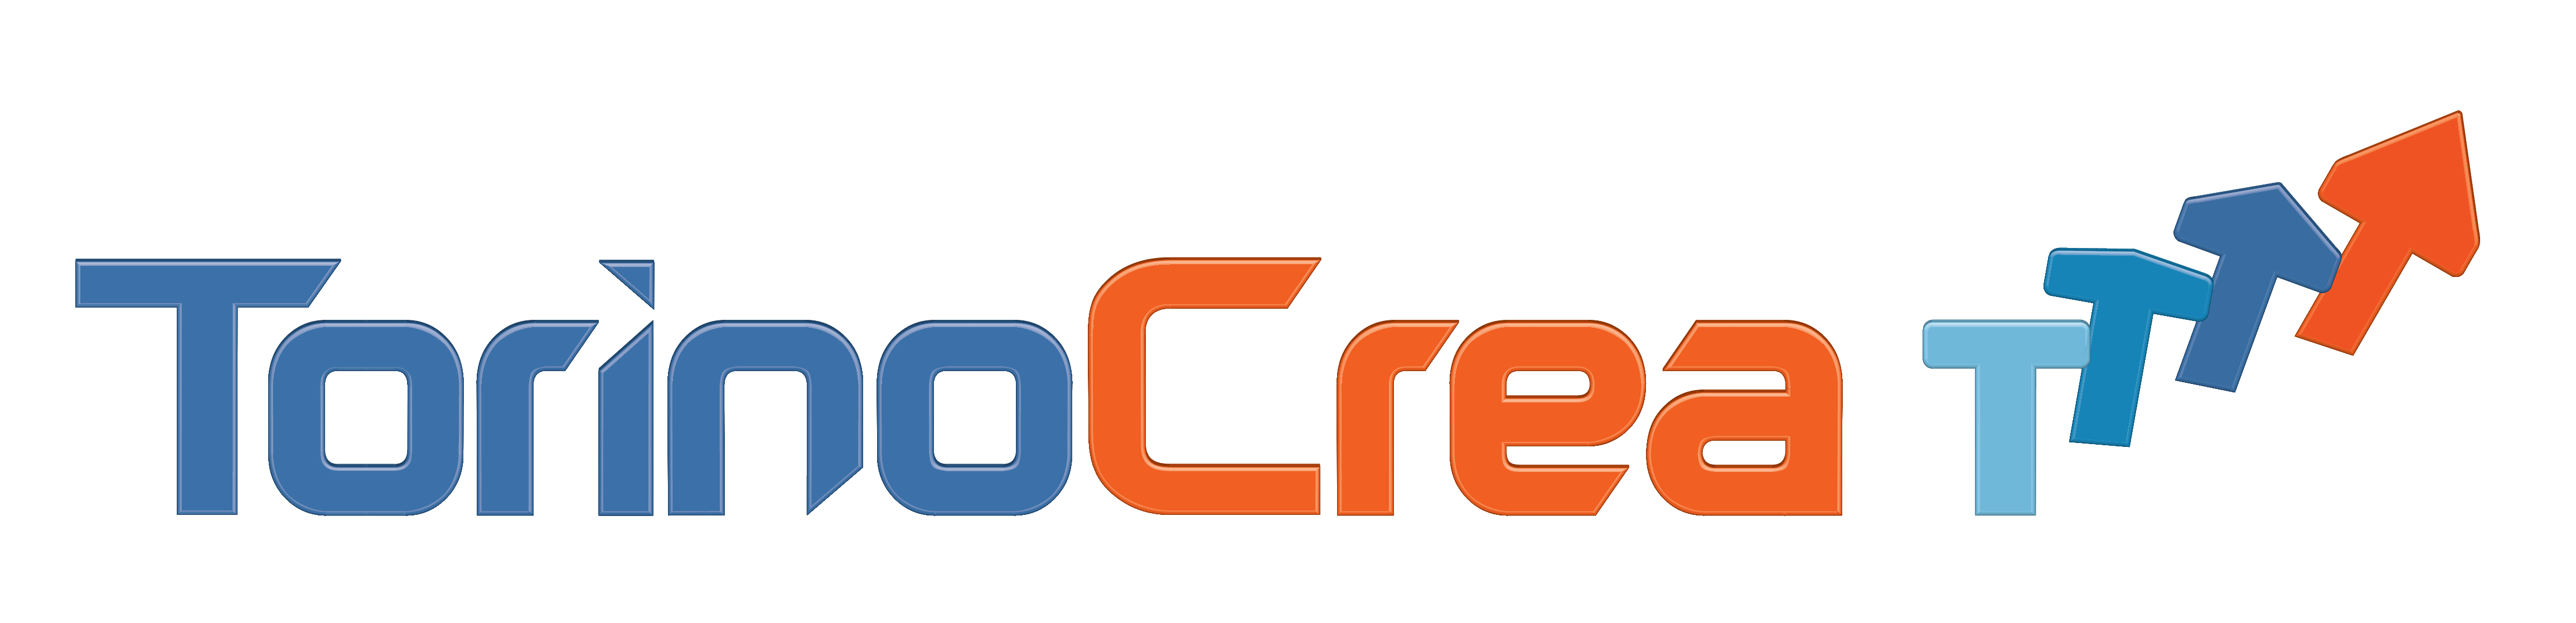 Logo Tce_01